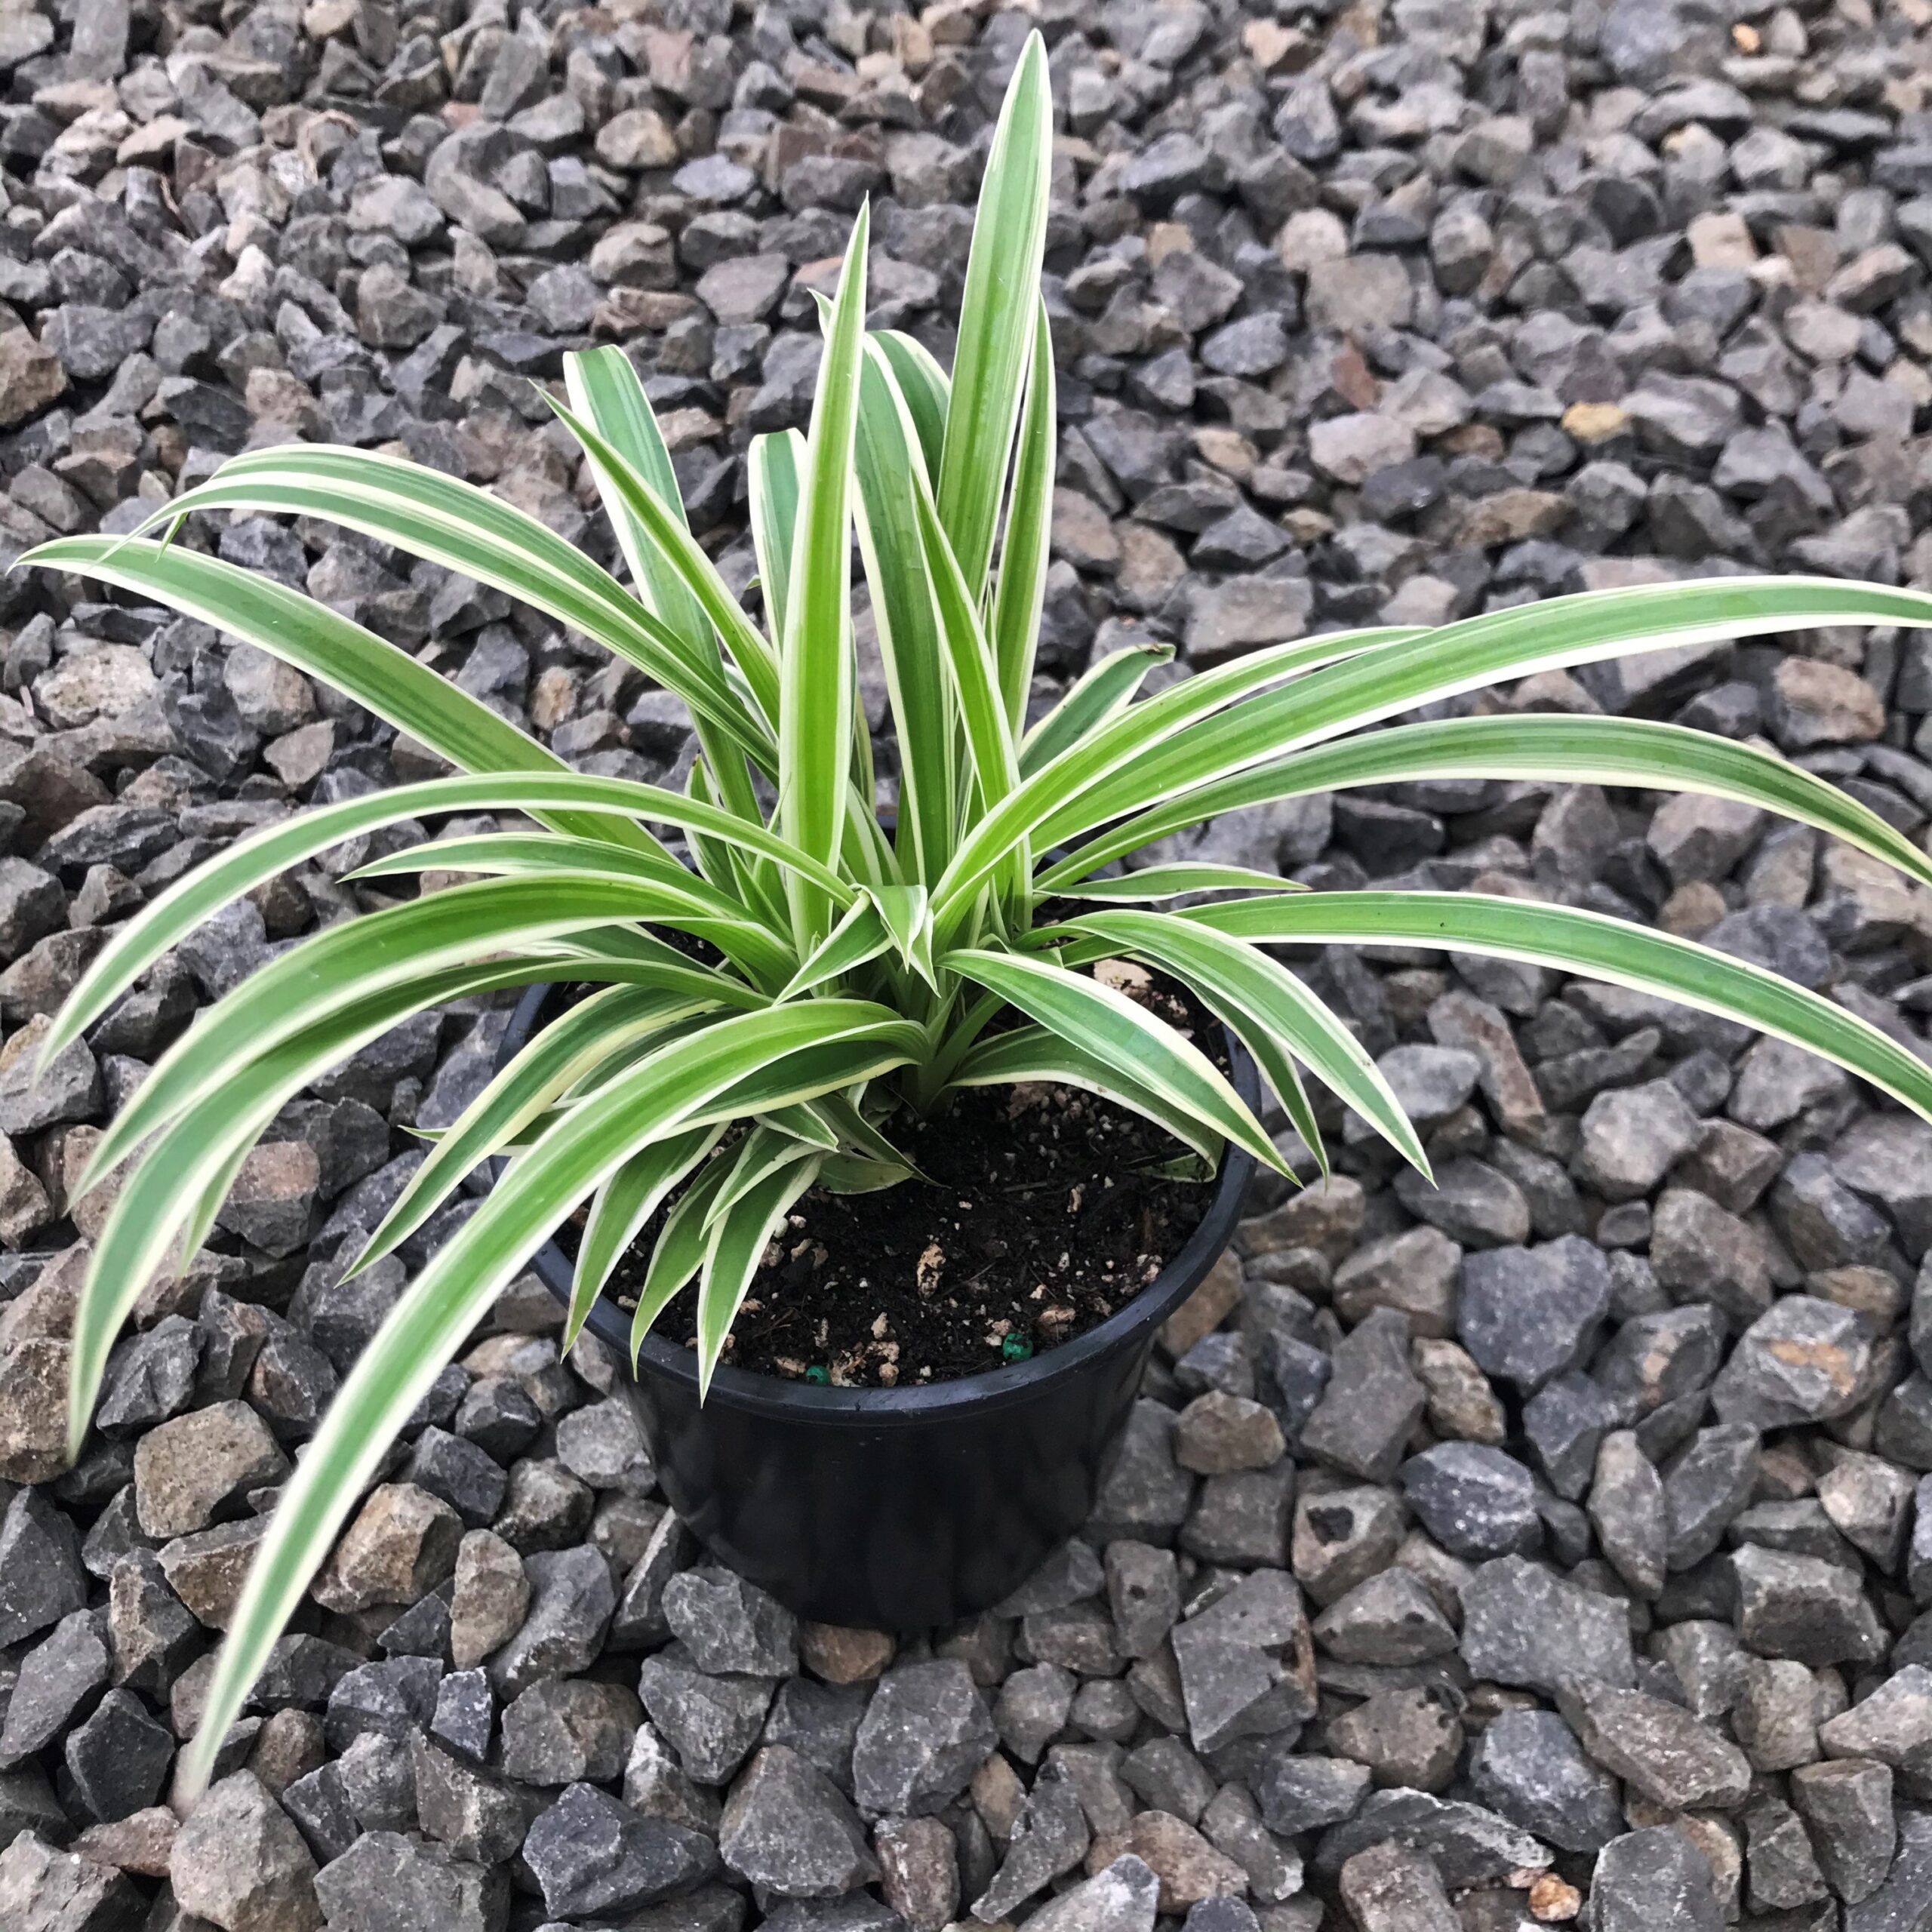 Chlorophytum comosum 'Ocean' Spider Plant (4.5" Pot